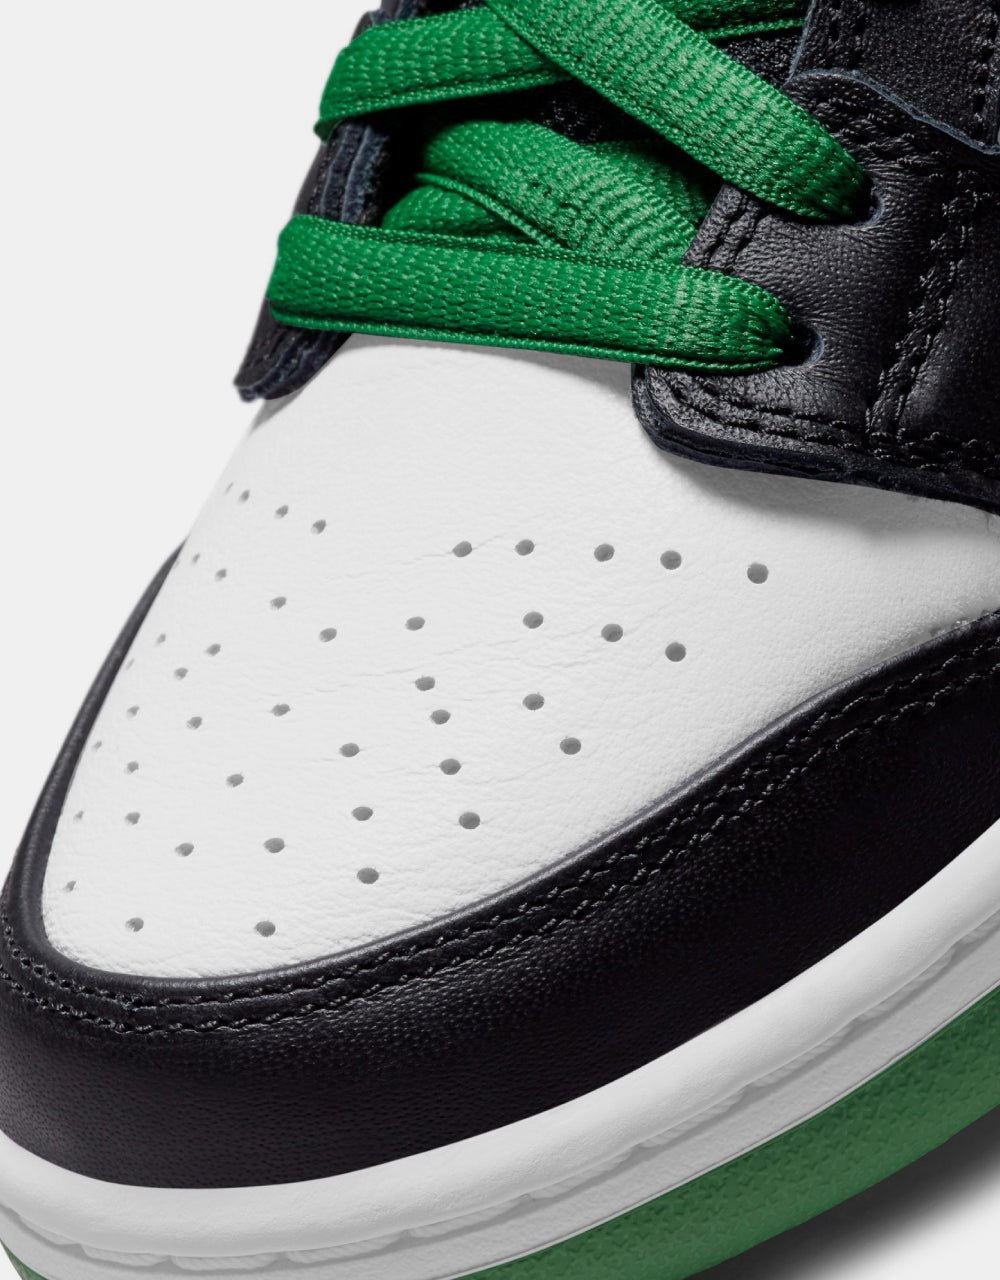 Nike SB Dunk Low Pro Skate Shoes - Classic Green/Black-White-Classic Green